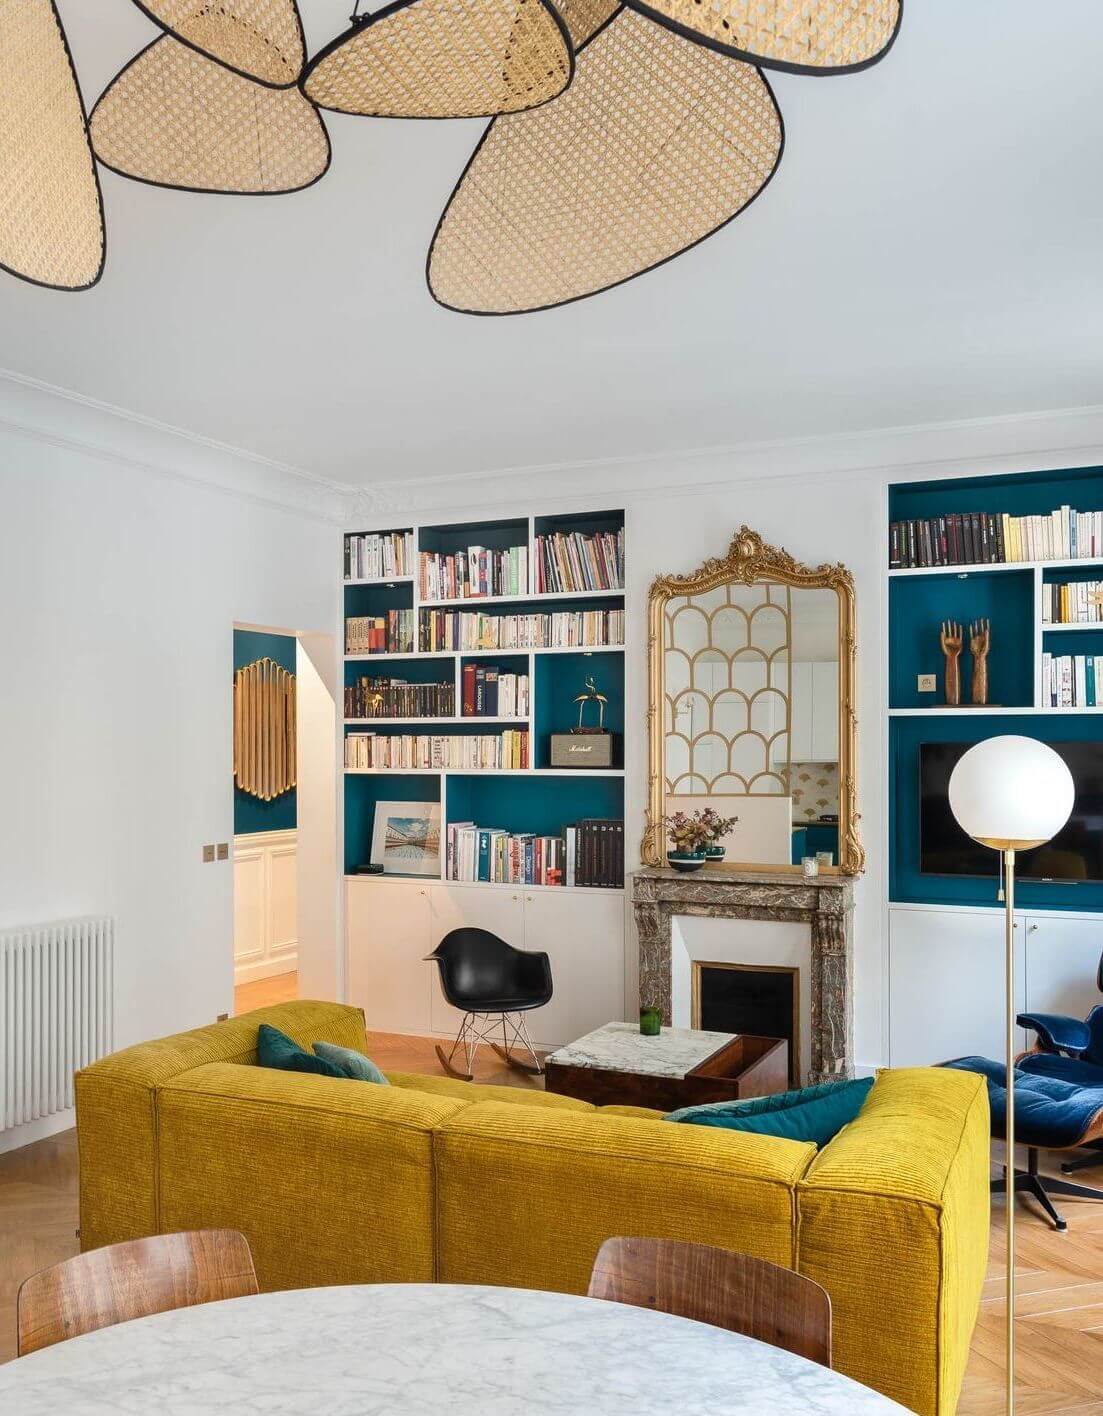 Parisian living room with mustard yellow sofa